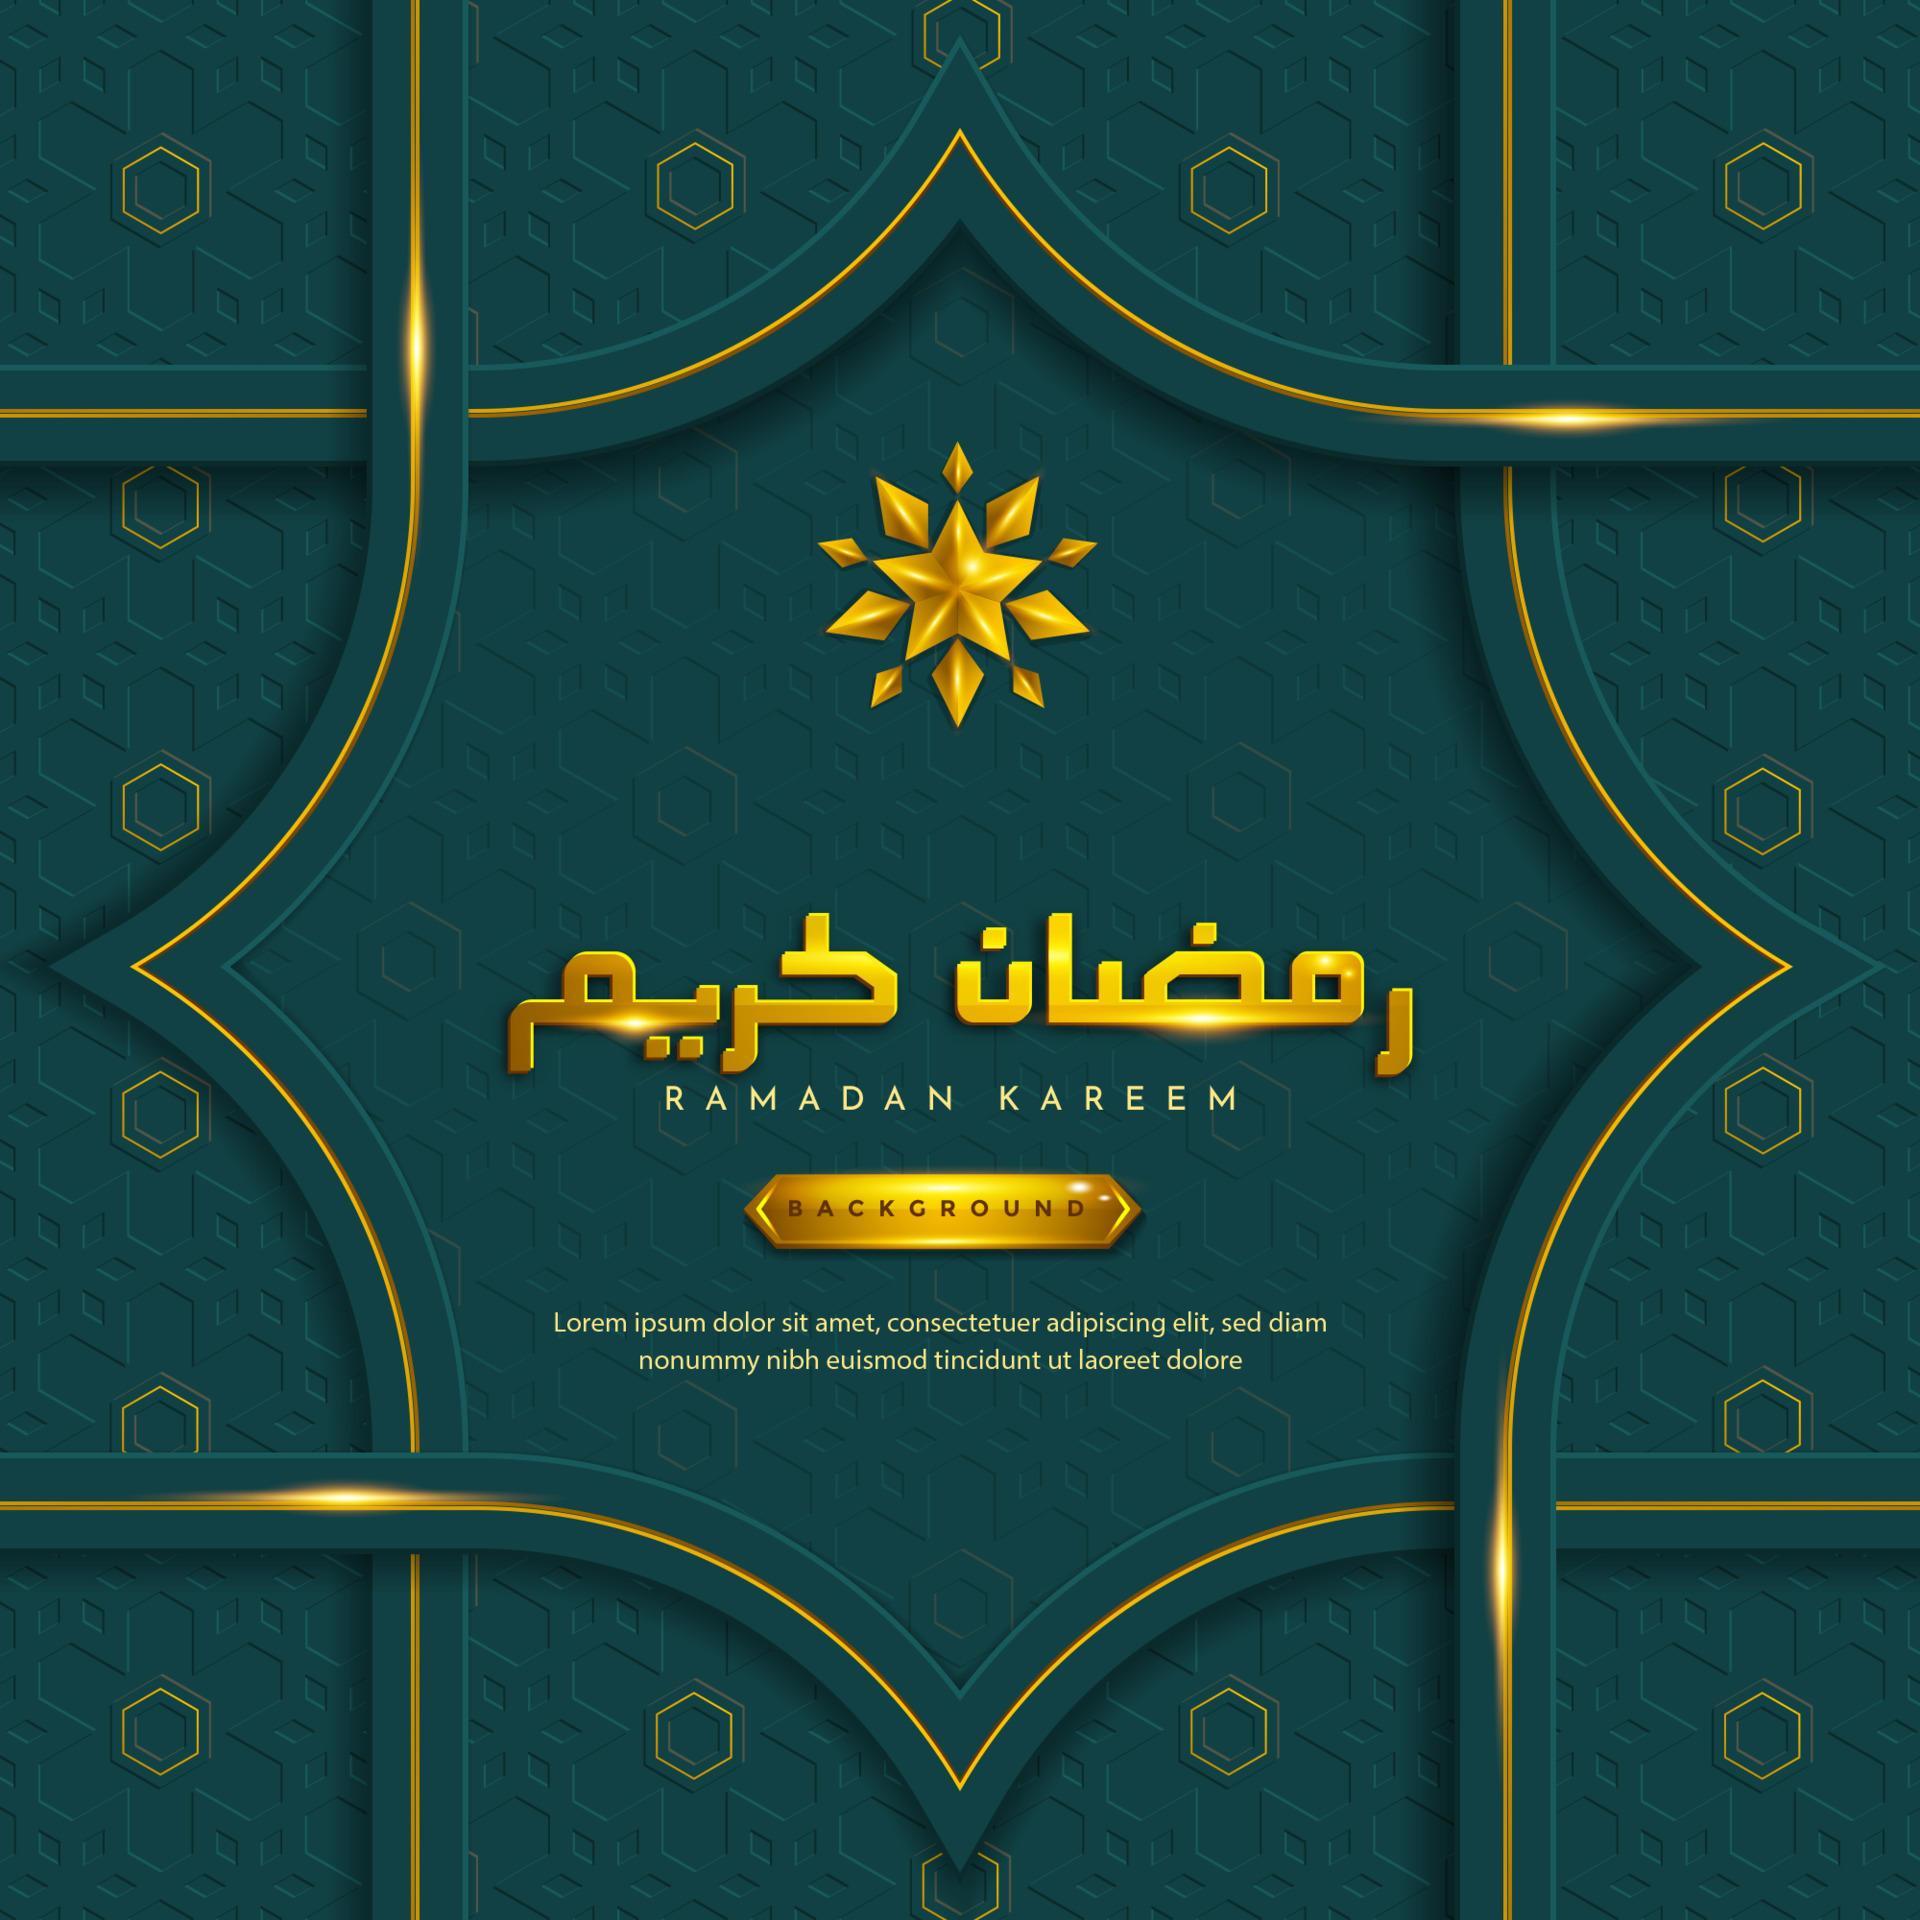 Ramadan kareem islamic greeting background with arabic pattern 5731435 ...